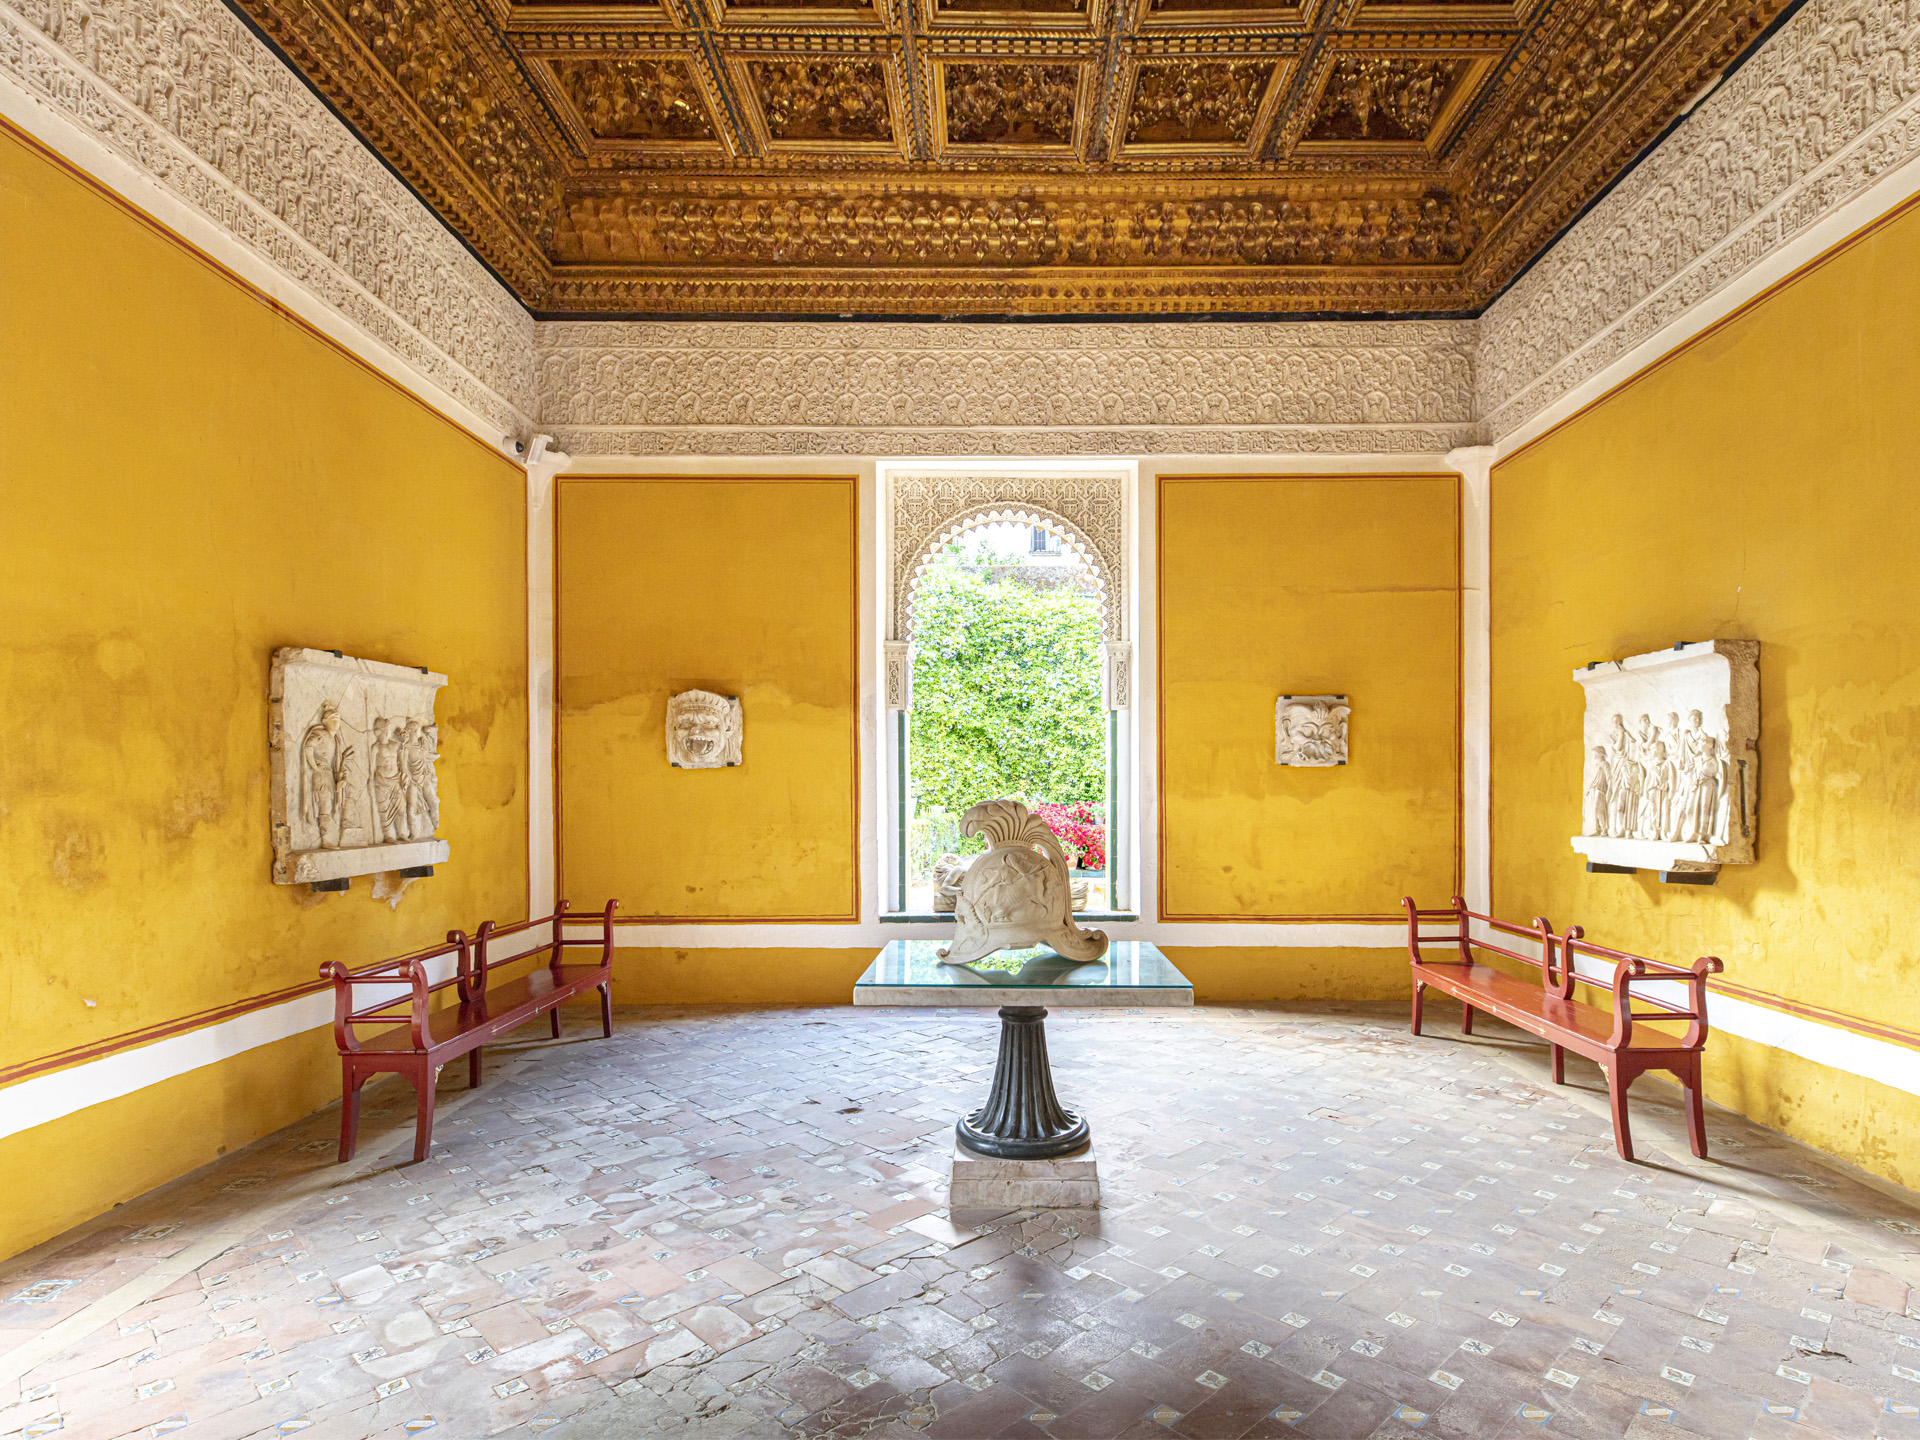 Golden Room, Casa de Pilatos. Seville ©Celia Rogge